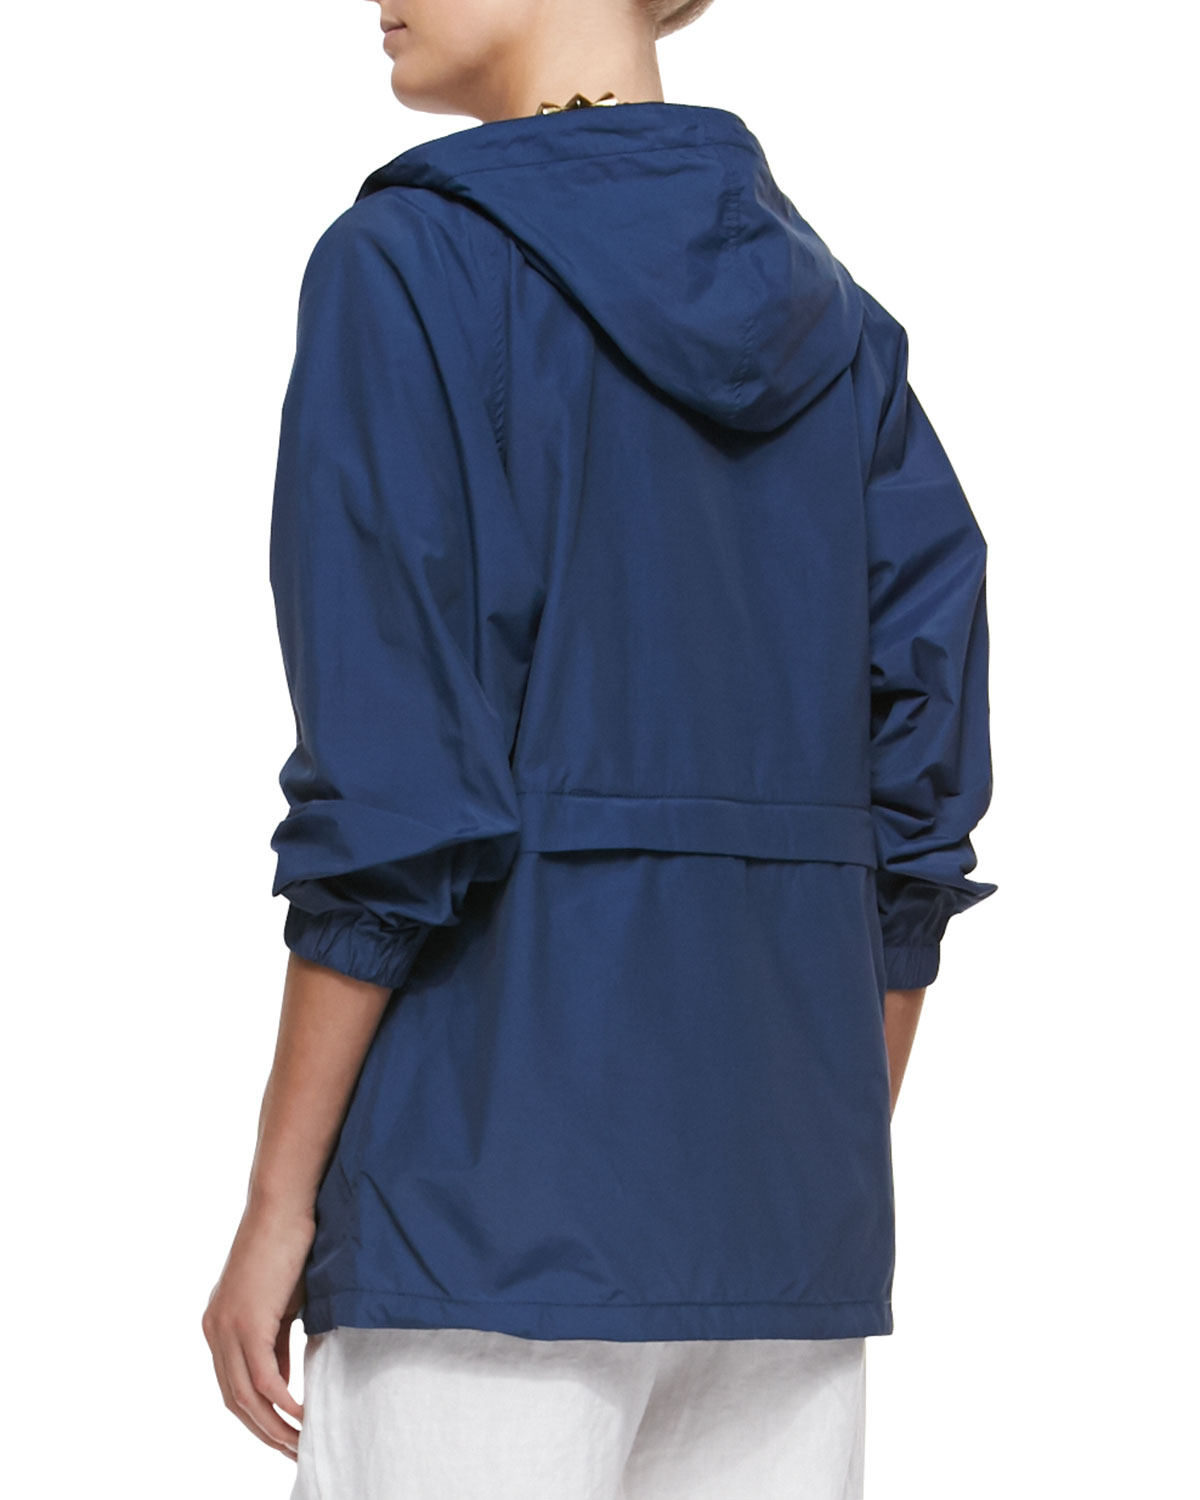 Lyst - Eileen Fisher Hooded Anorak Jacket in Blue